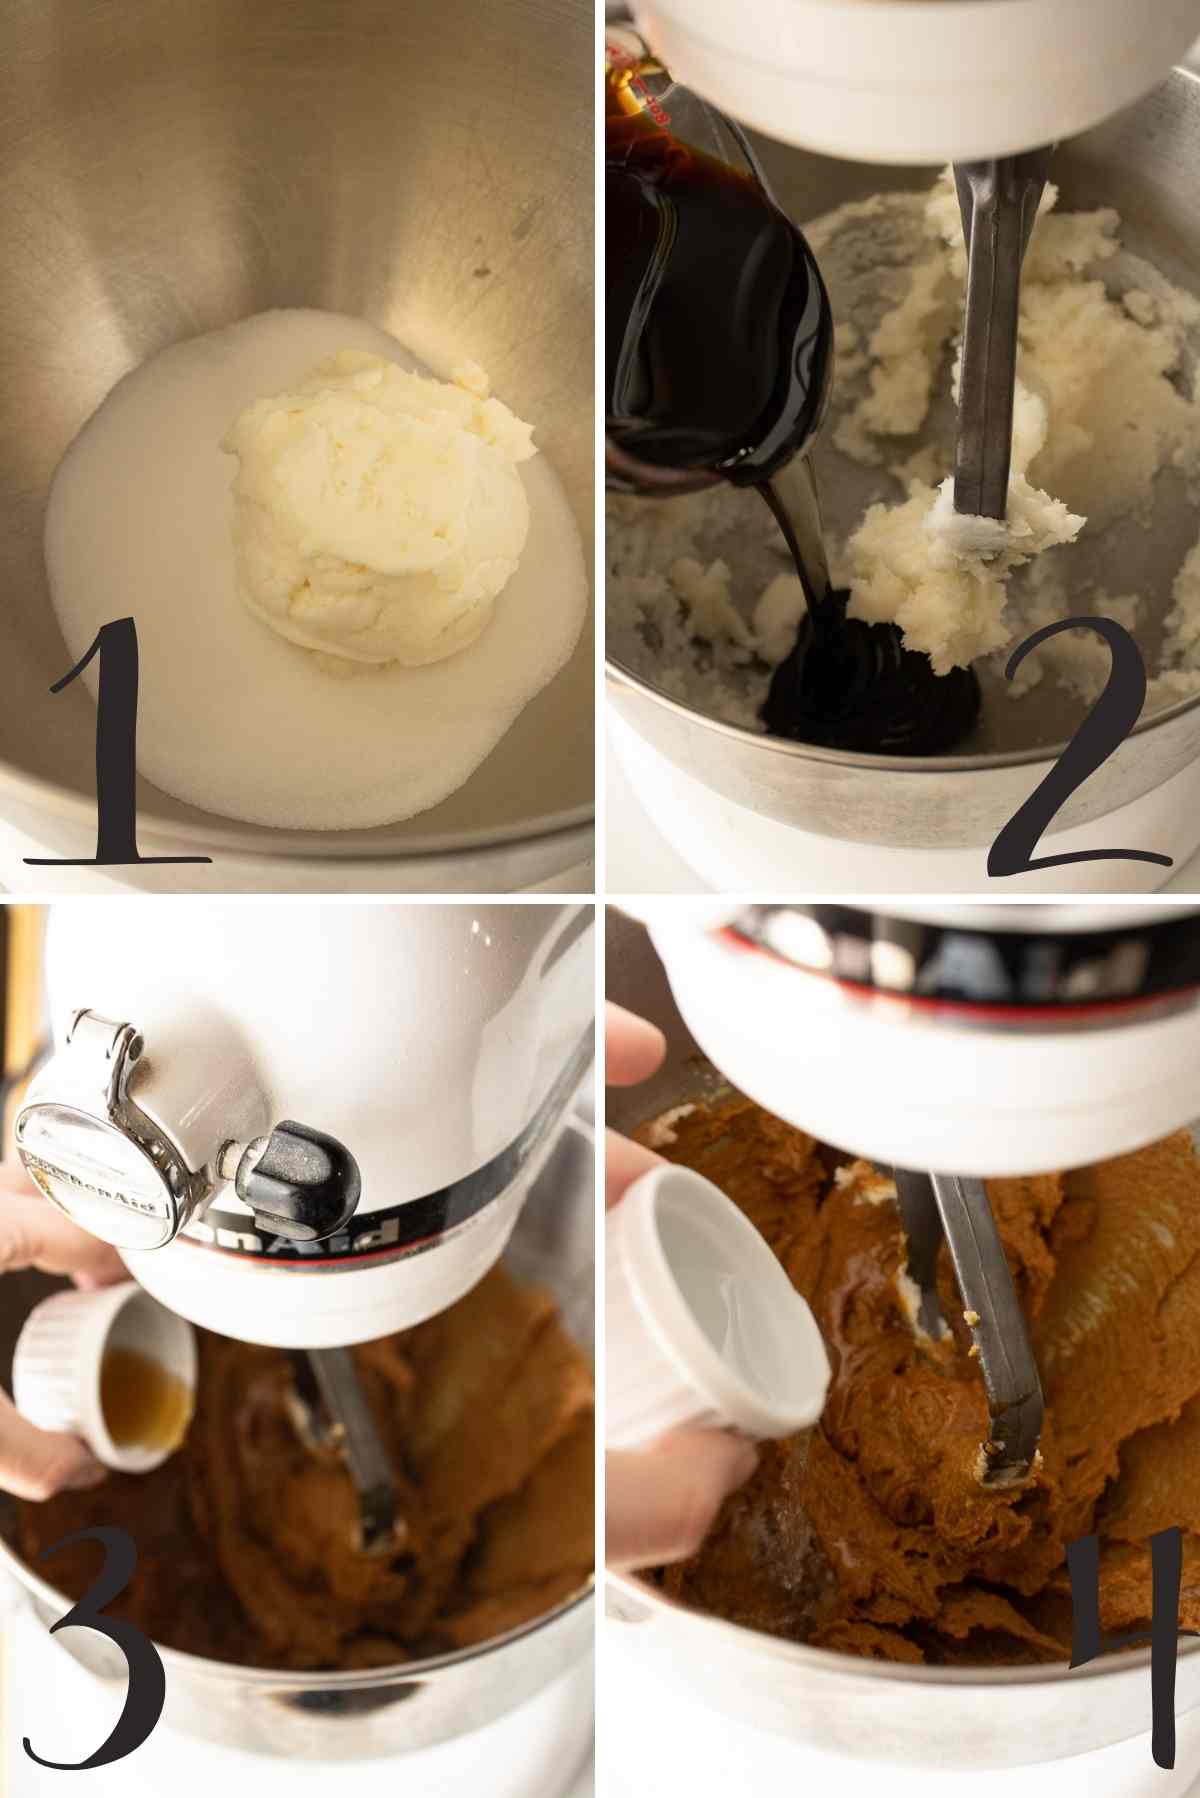 Creaming of the shortening and sugar, adding the molasse, vanilla, and vinegar.